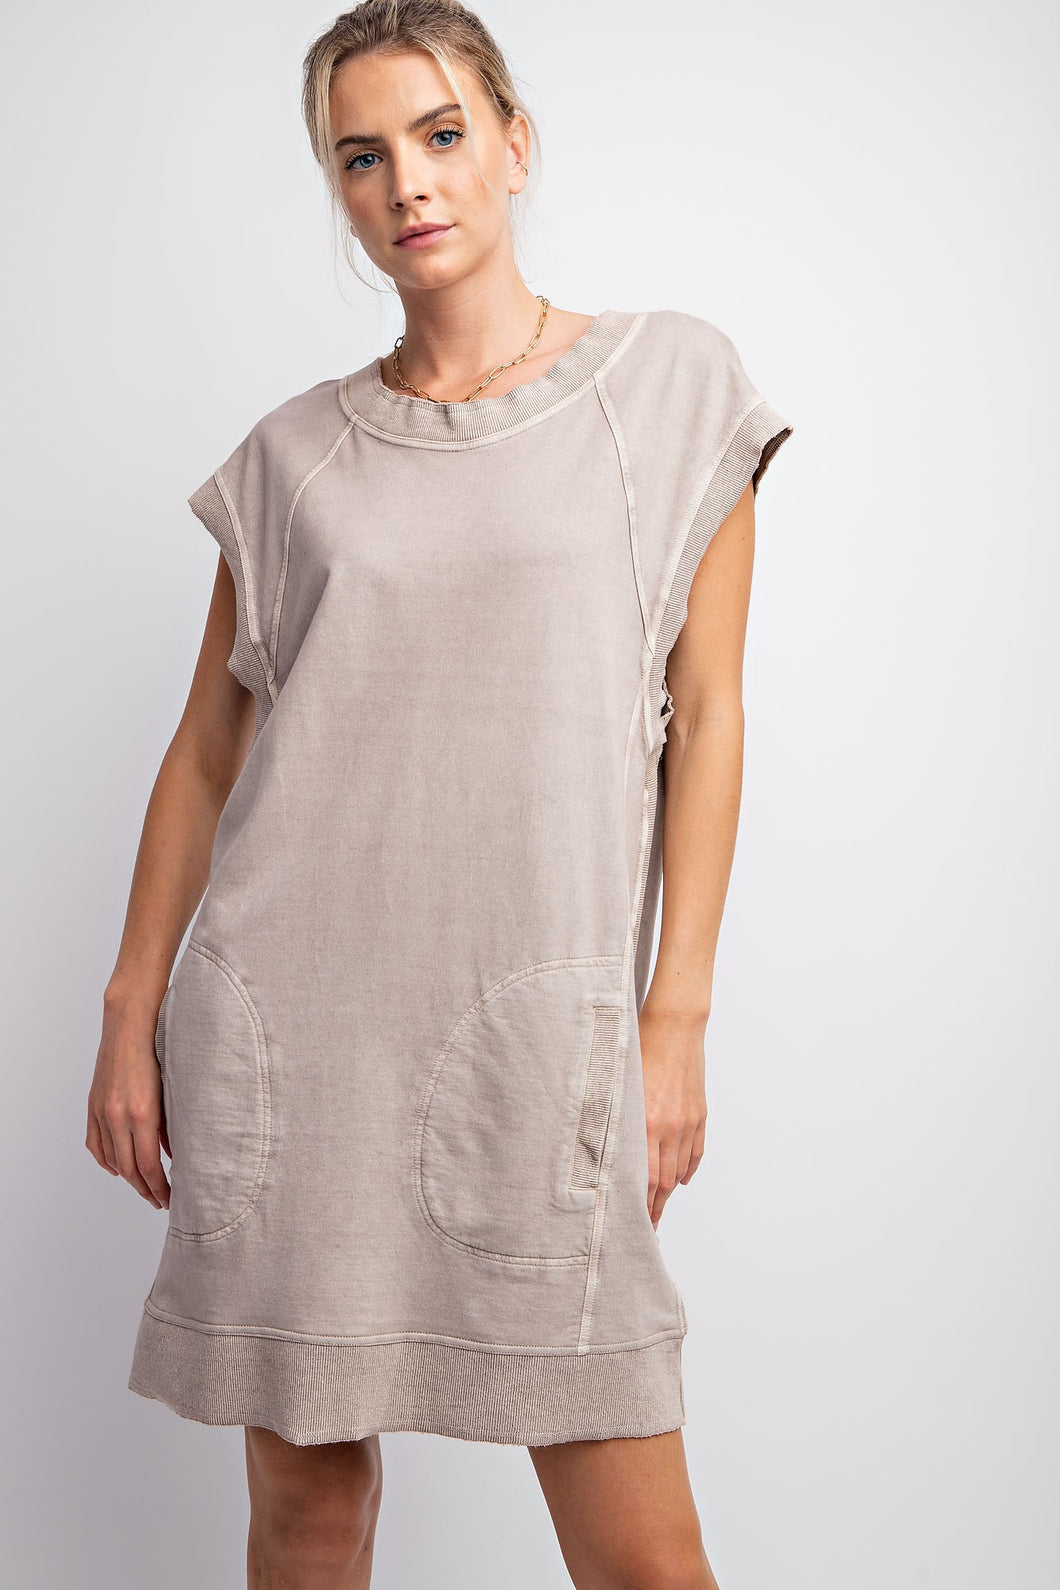 Easel Solid Color Short Terry Knit Dress in Mushroom Dresses Easel   